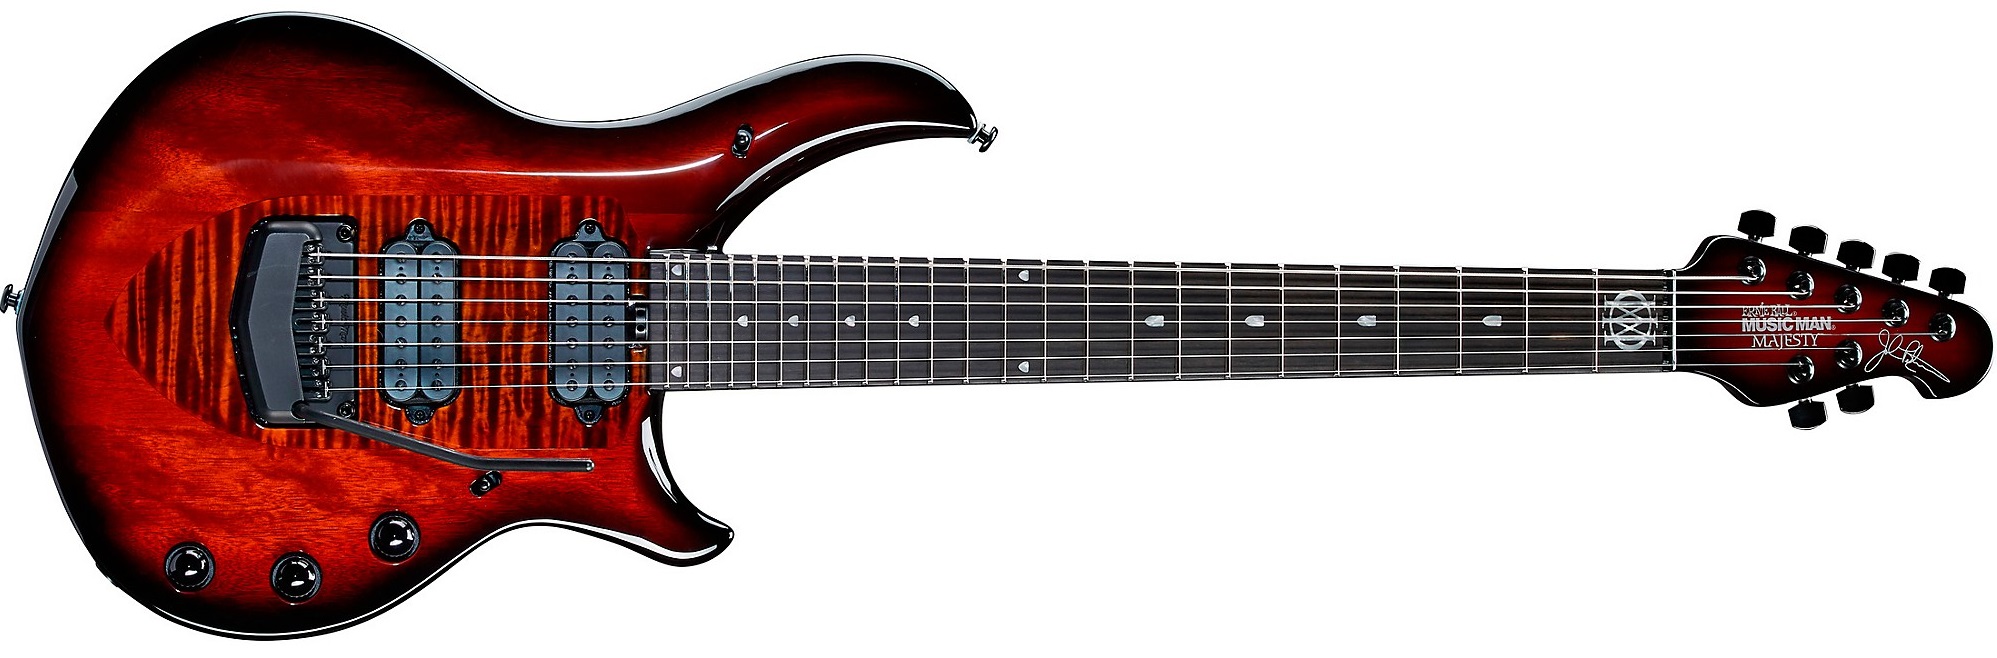 Ernie Ball Music Man John Petrucci Majesty 7 Electric Guitar on a white background